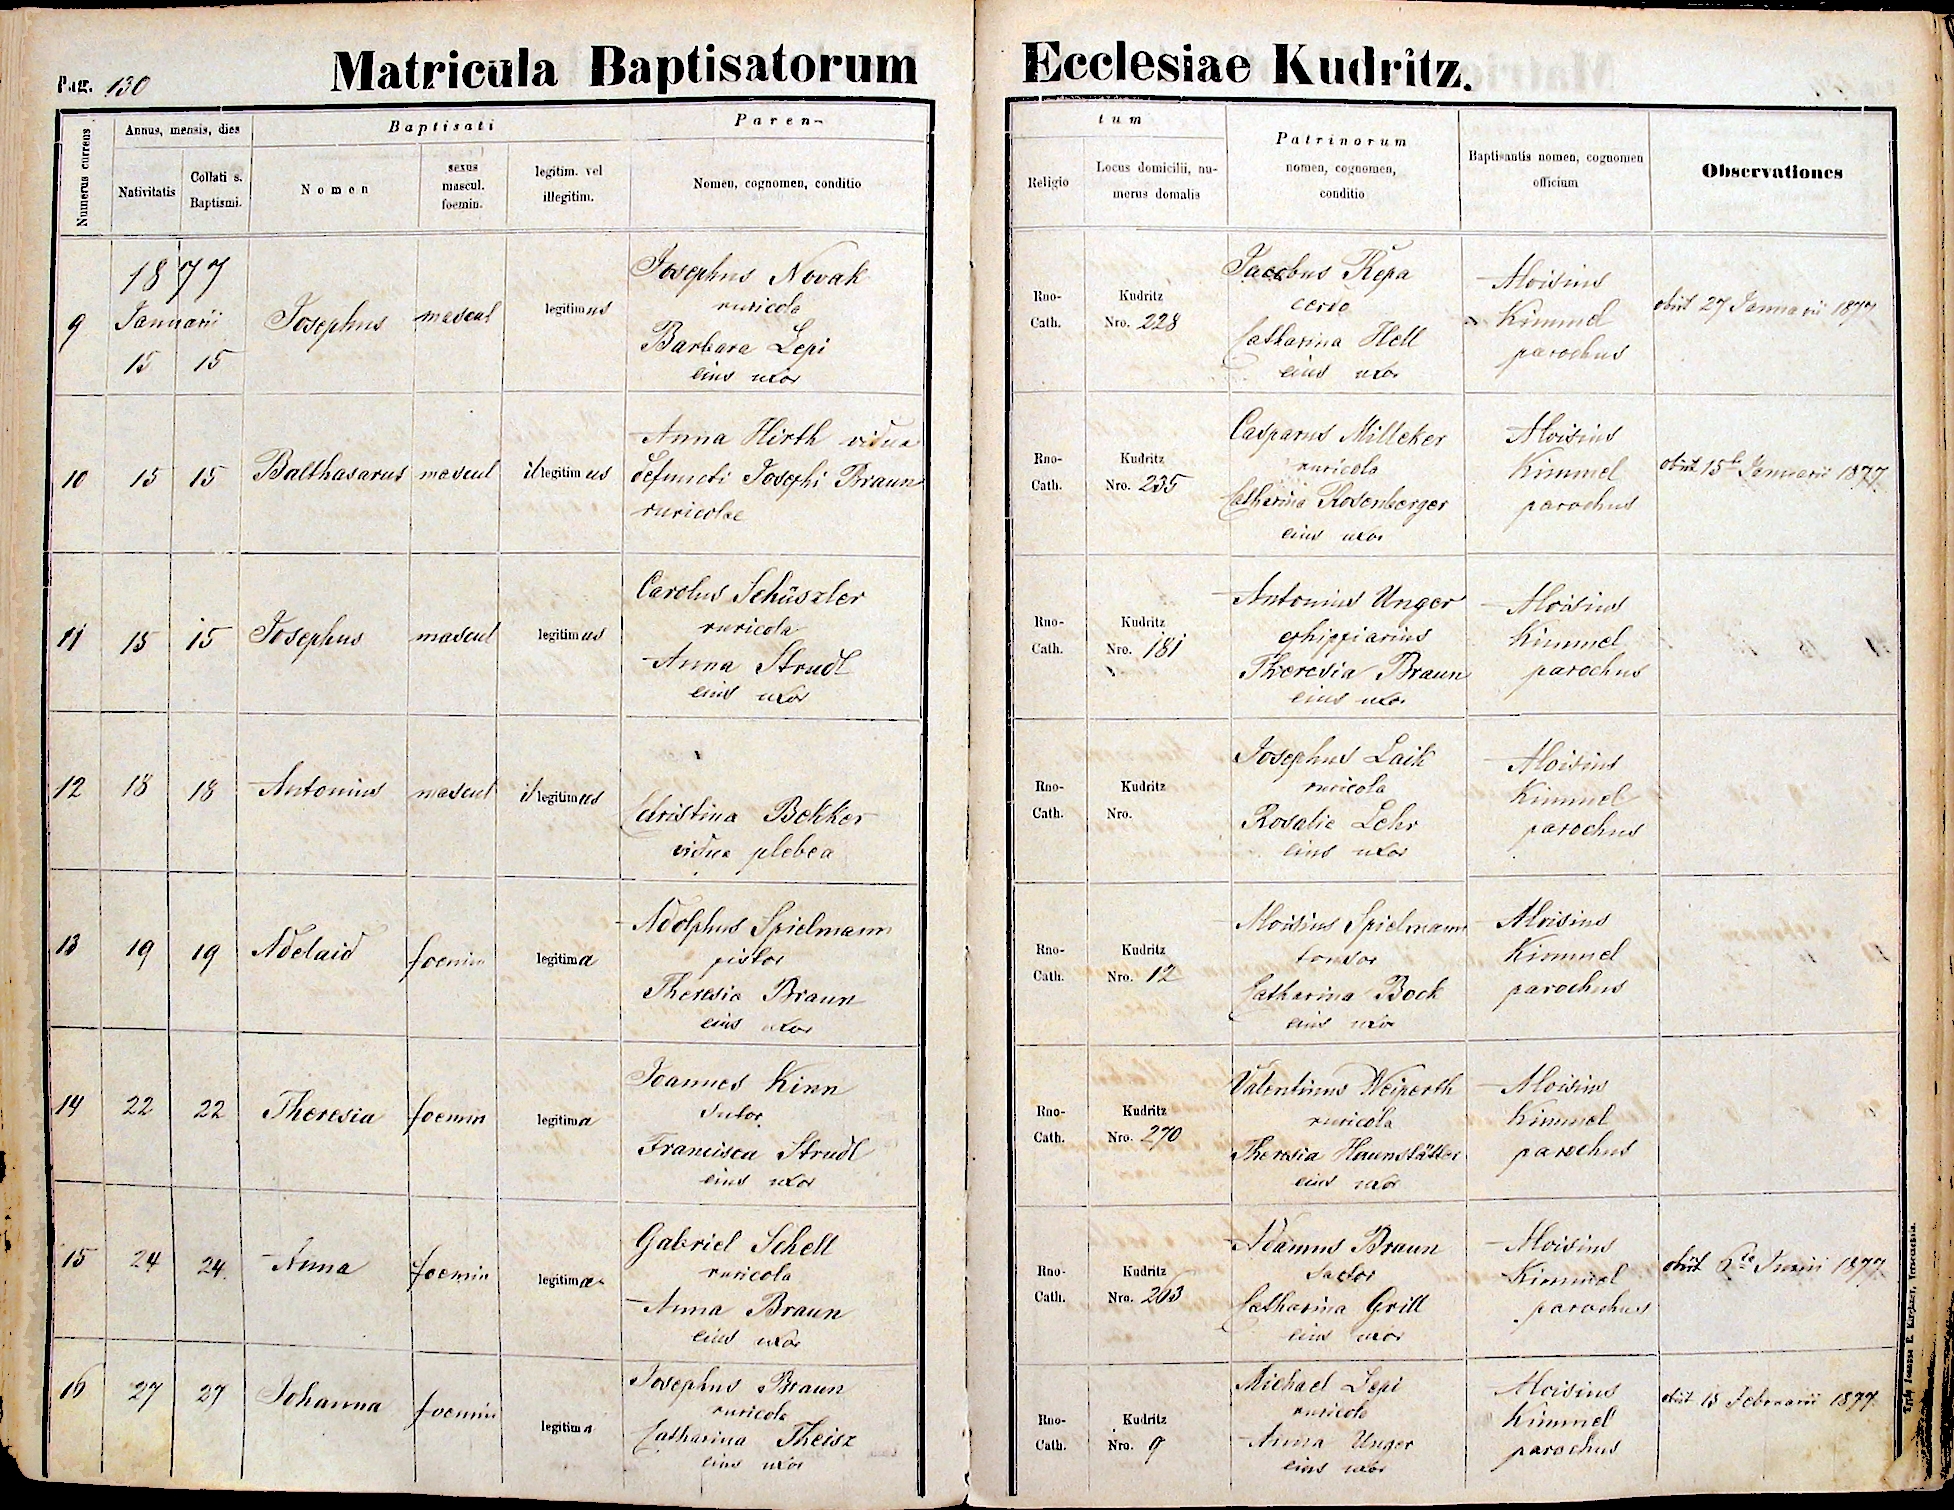 images/church_records/BIRTHS/1870-1879B/1876/130